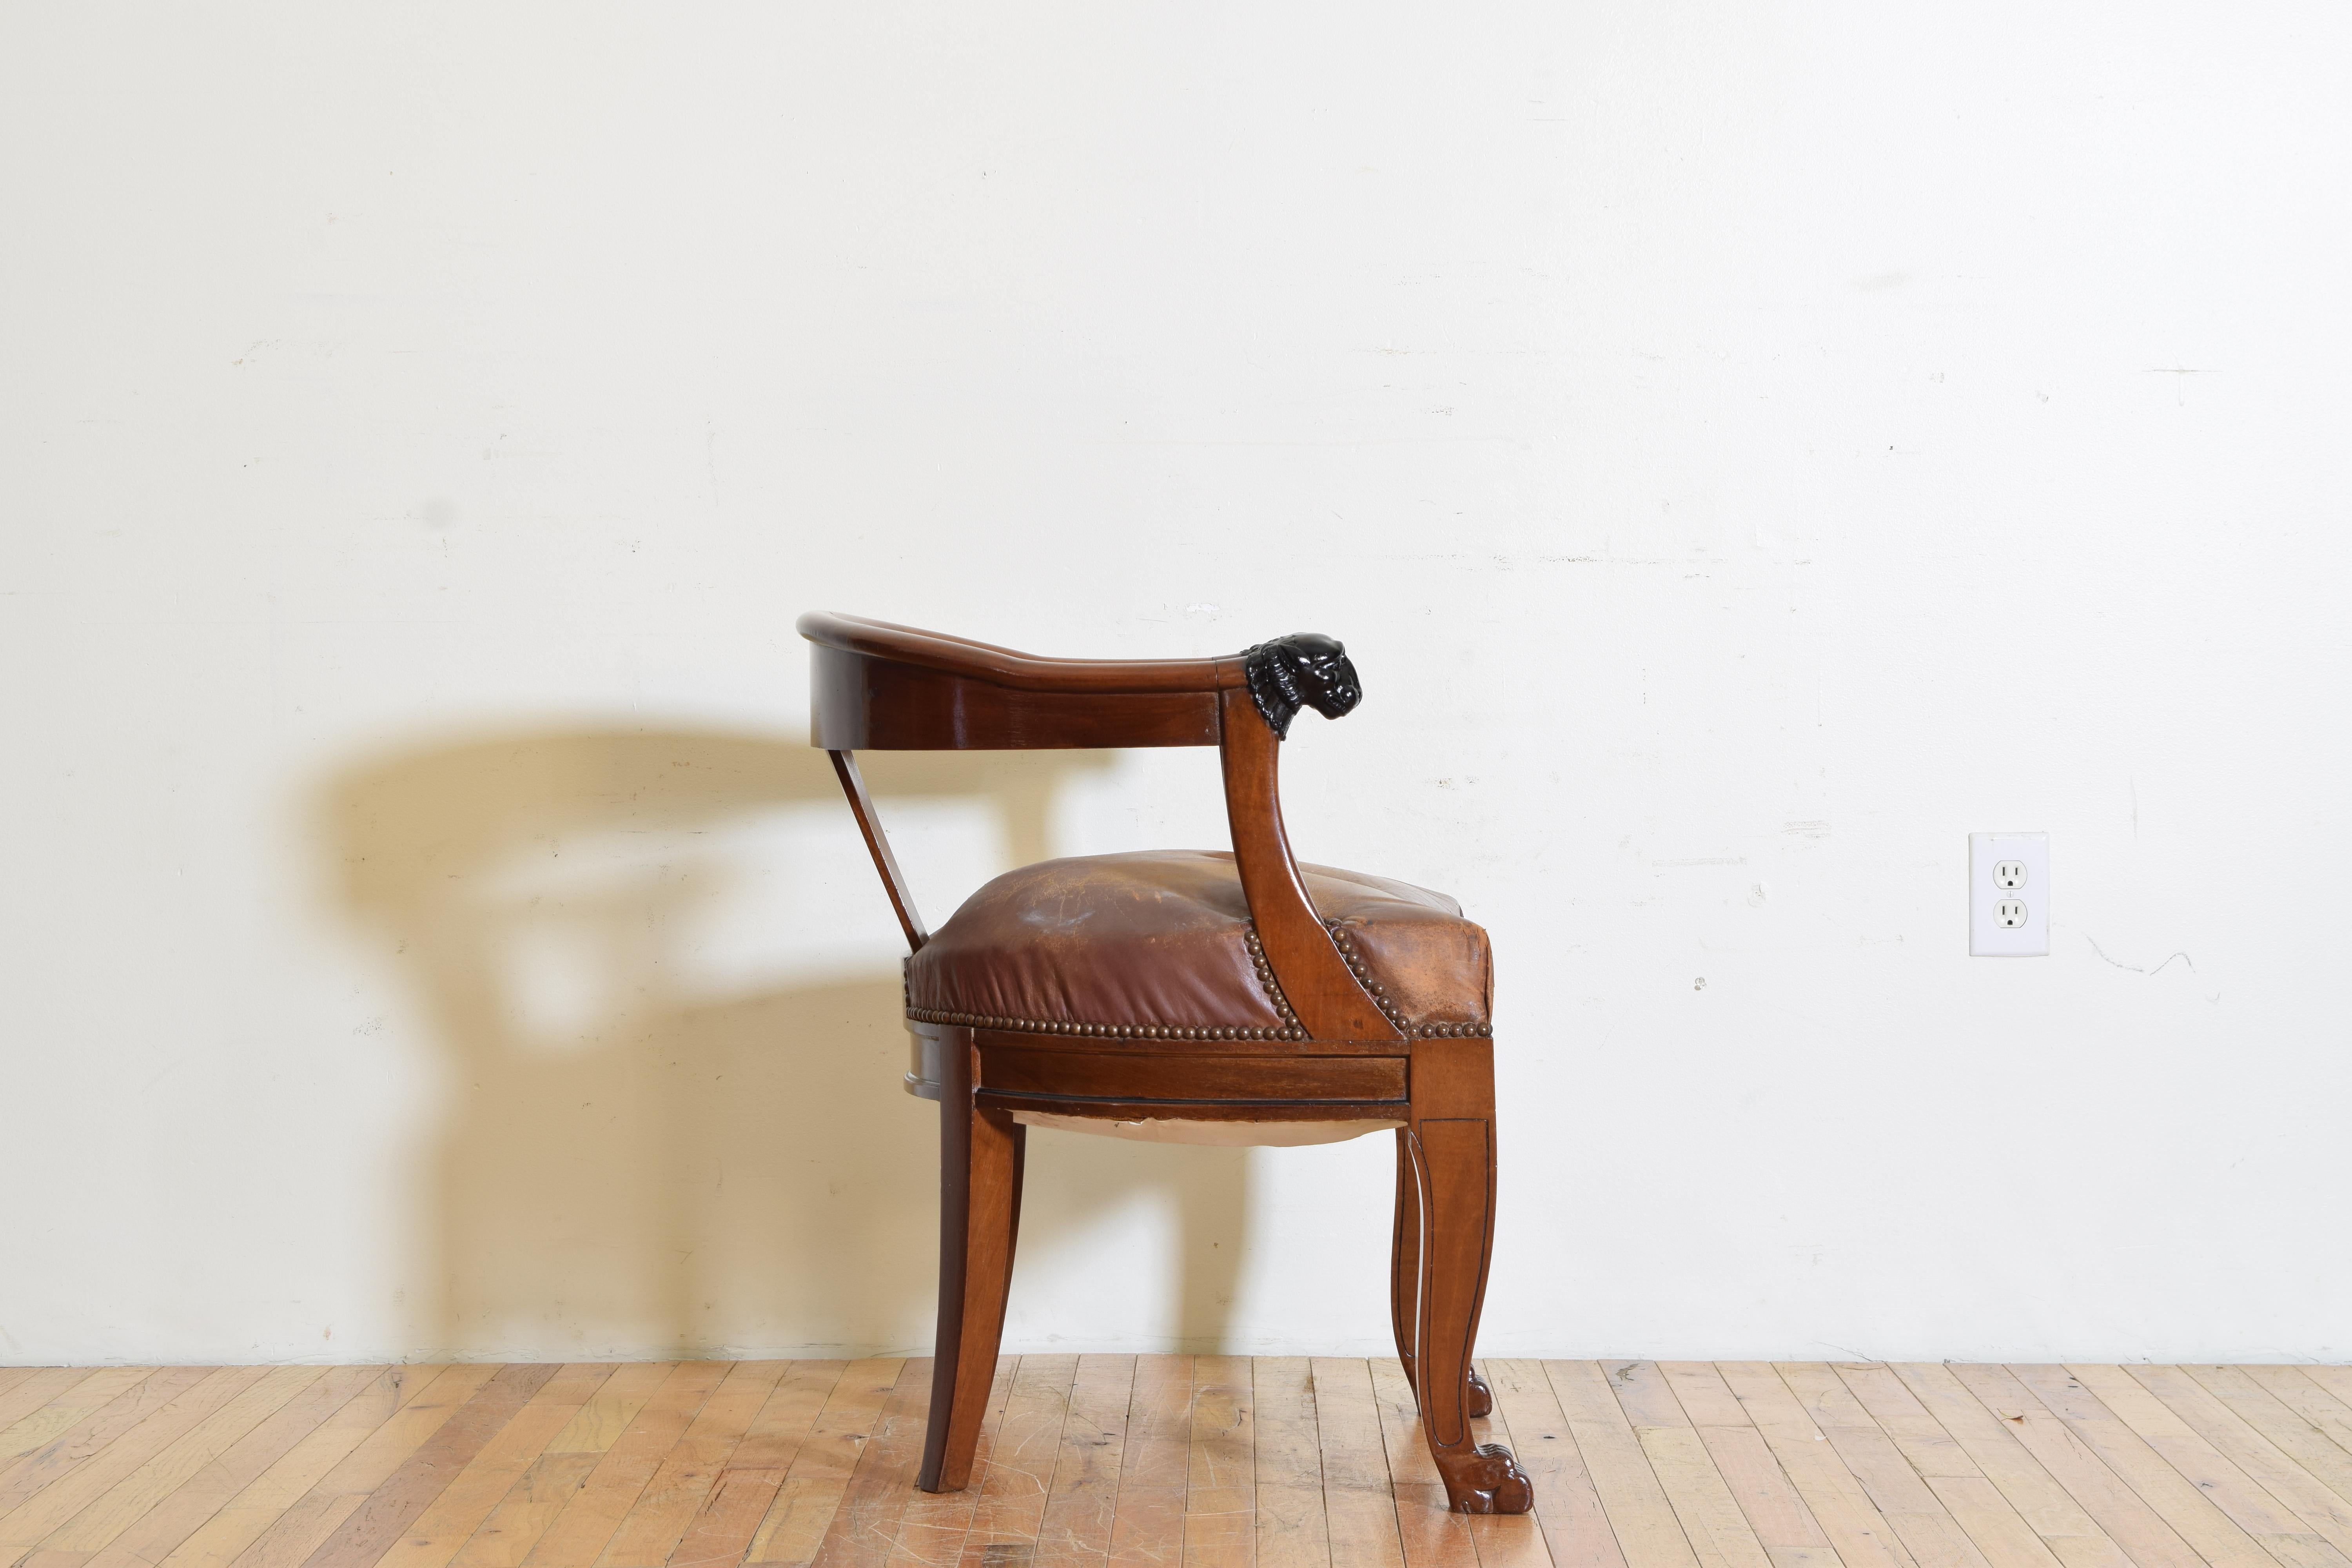 Late 19th Century French Empire Revival Mahogany and Ebonized Desk Chair, Last Quarter 19th Cen.